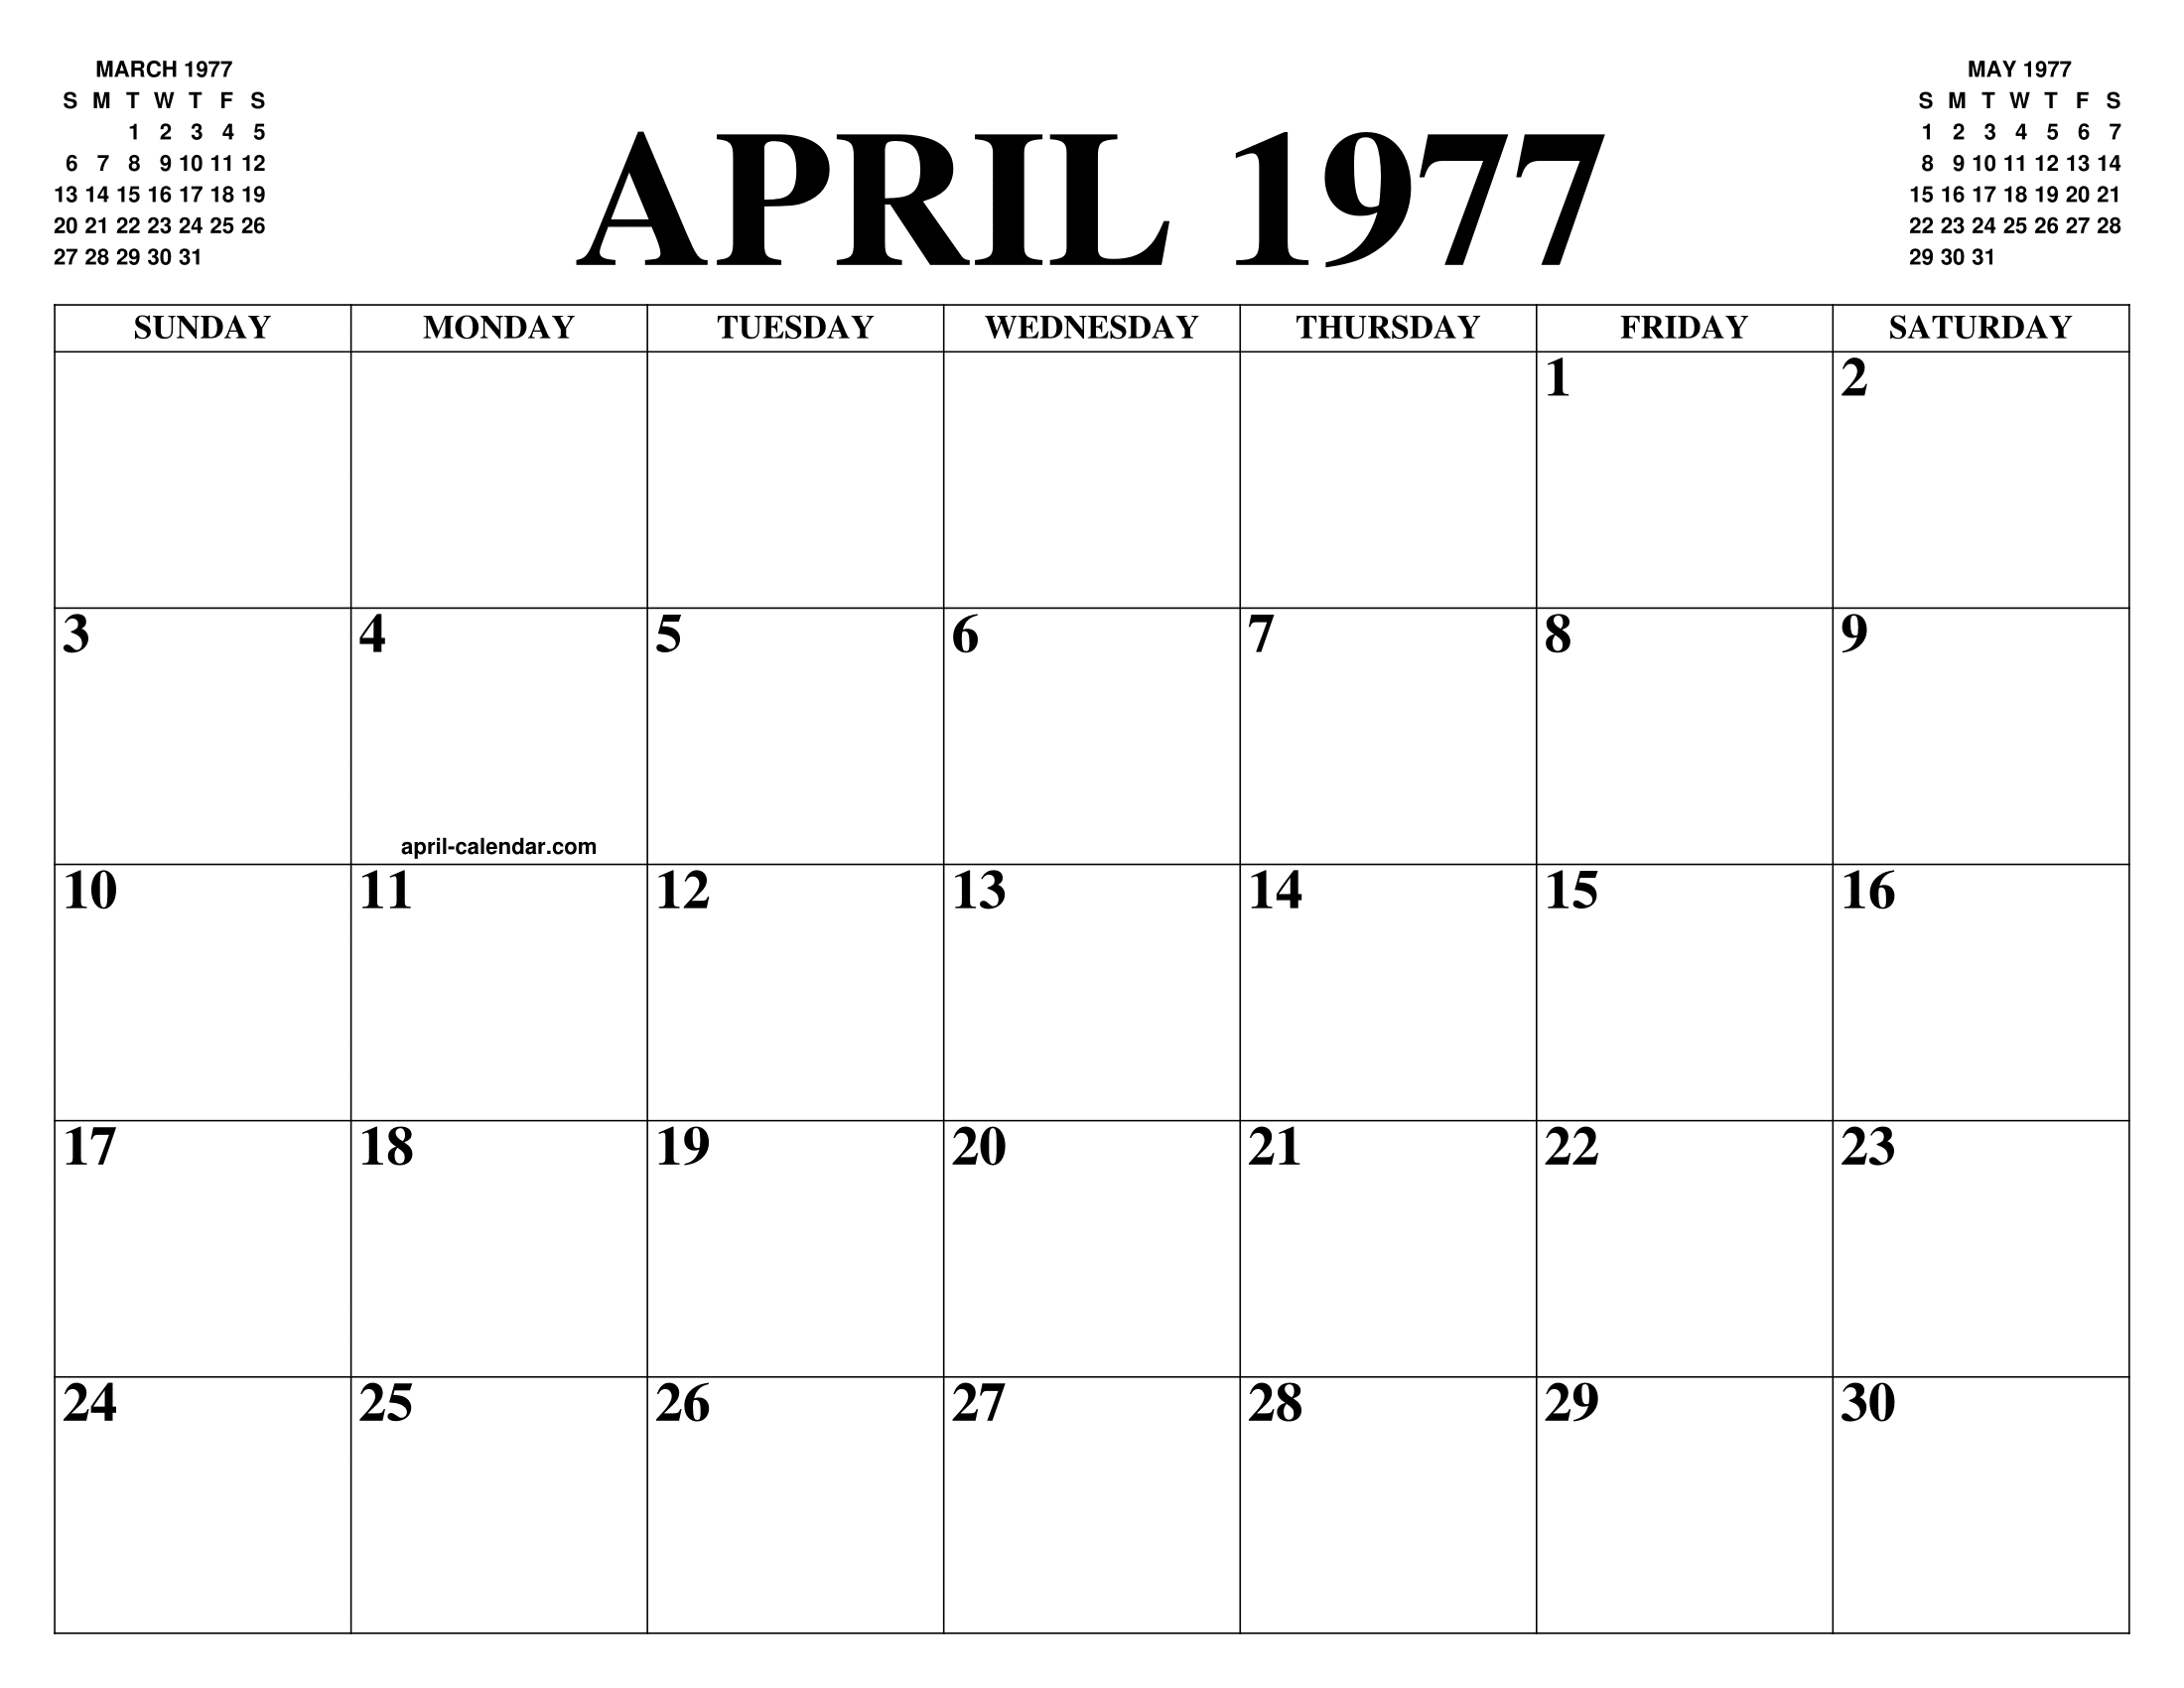 APRIL 1977 CALENDAR OF THE MONTH: FREE PRINTABLE APRIL CALENDAR OF THE